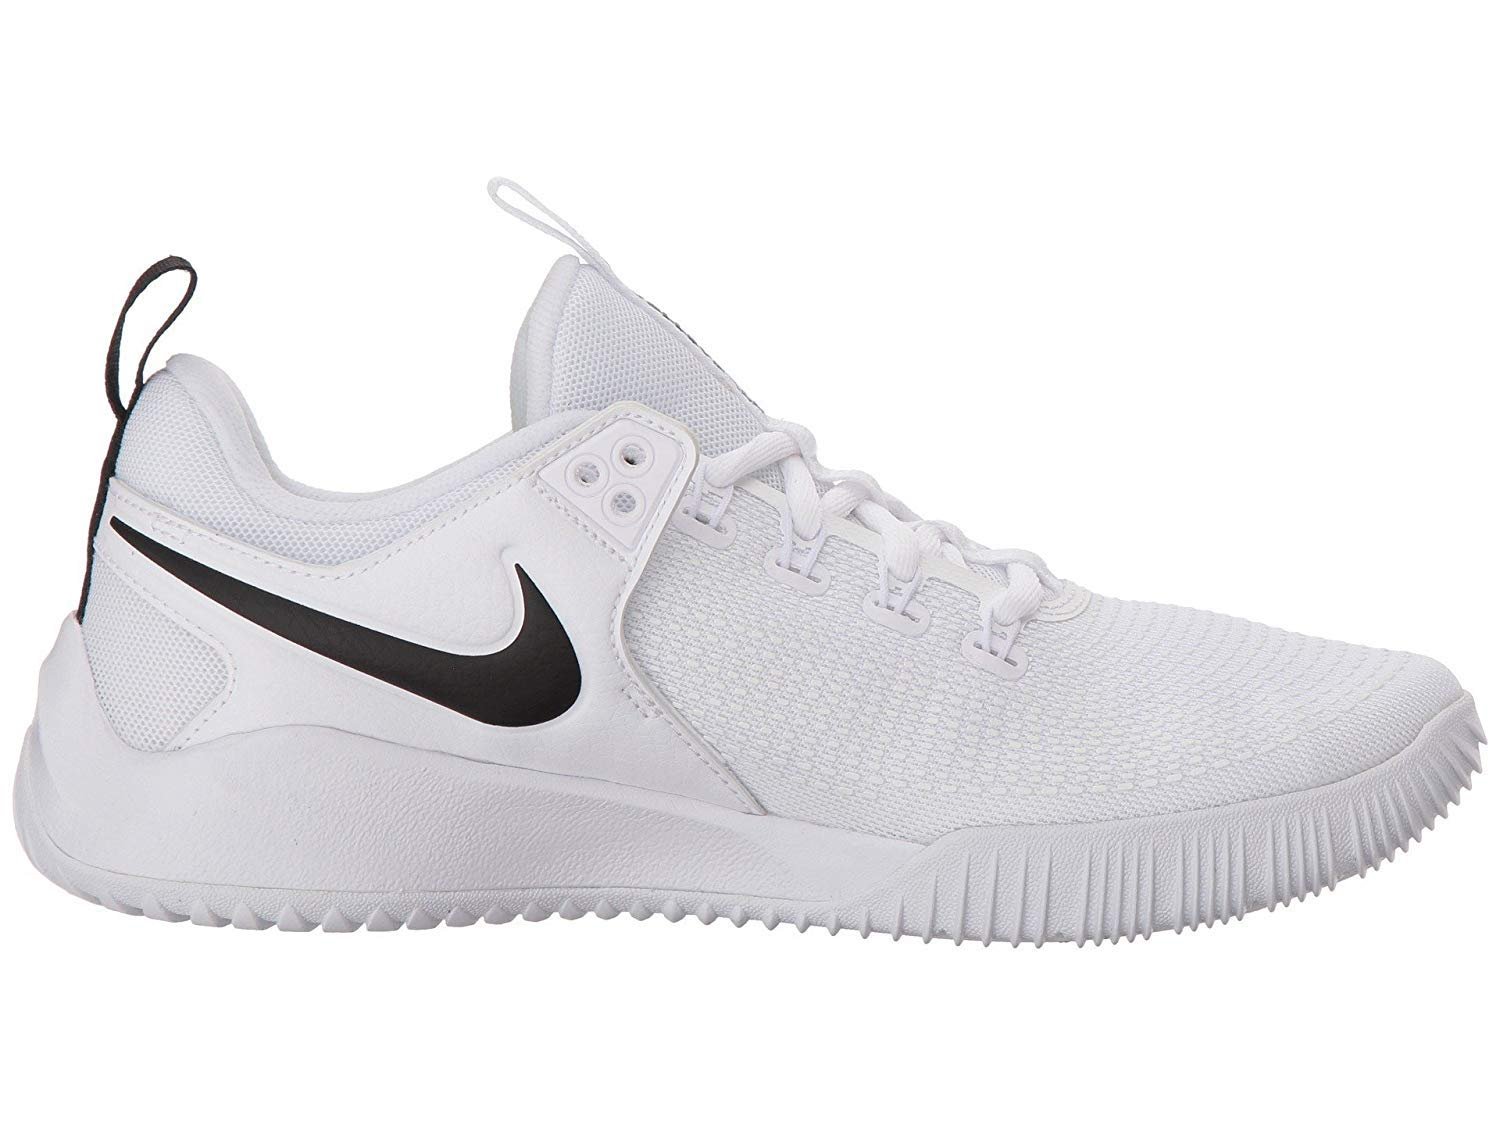 Nike Womens Zoom Hyperace 2 Volleyball Shoe | eBay